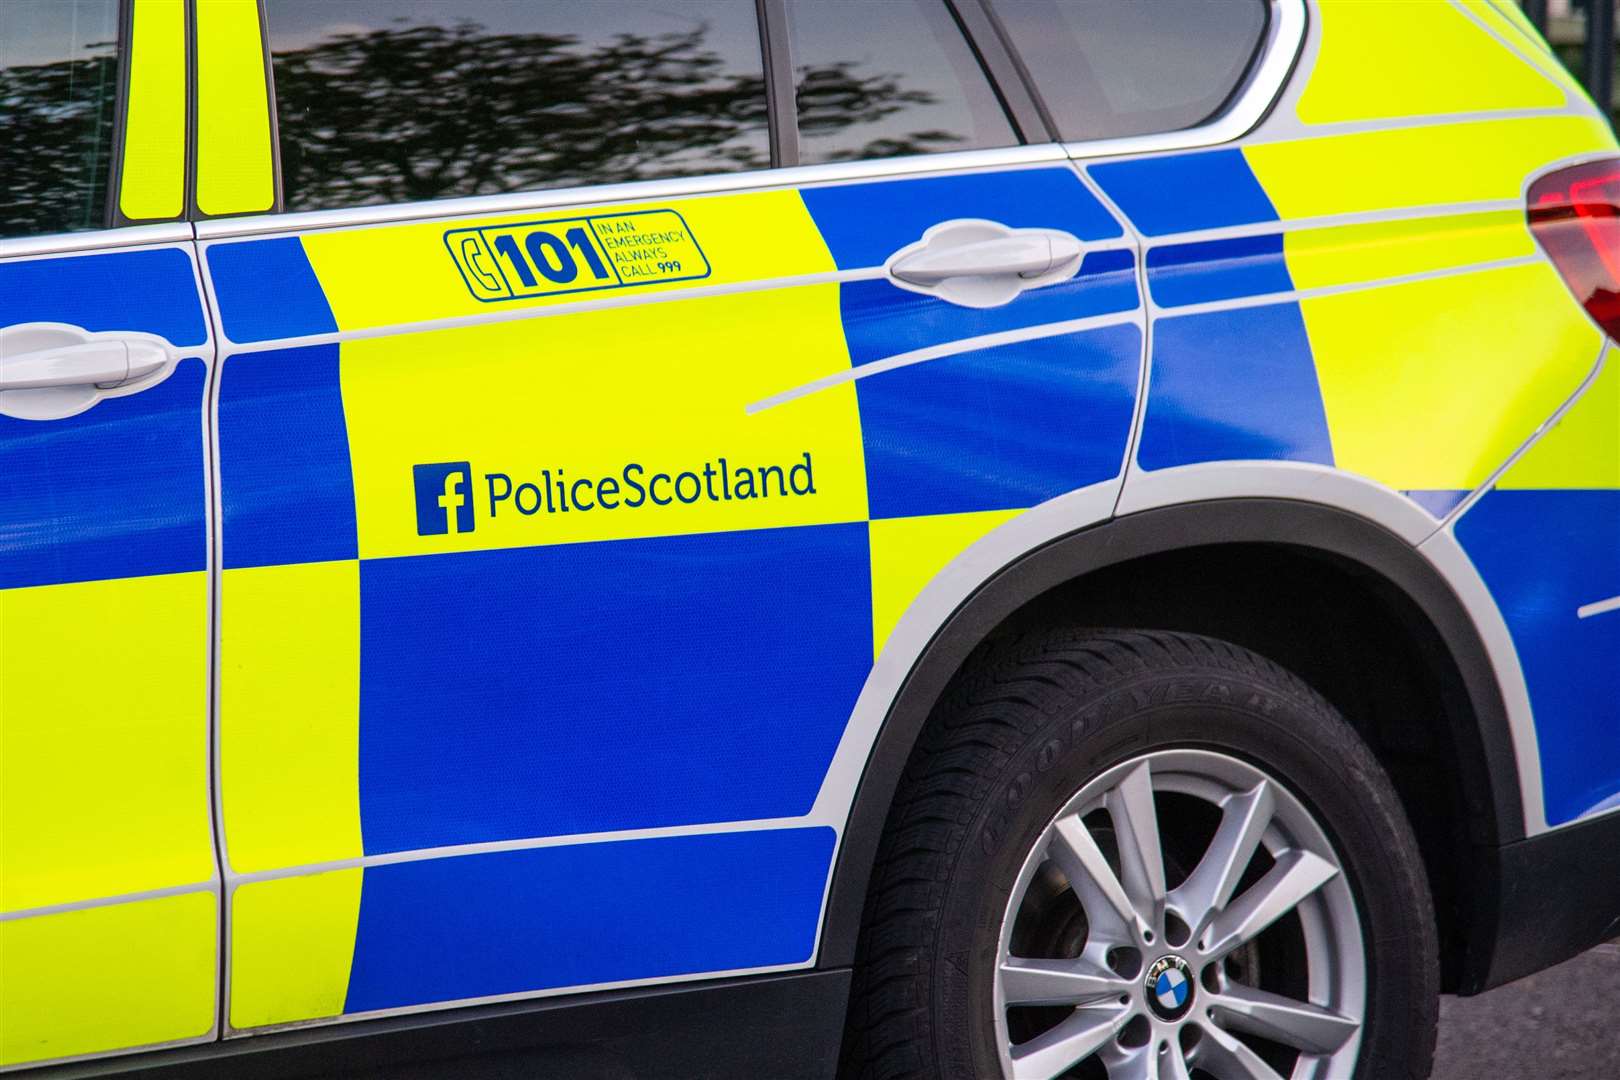 Police Scotland news. Picture: Highland News & Media.